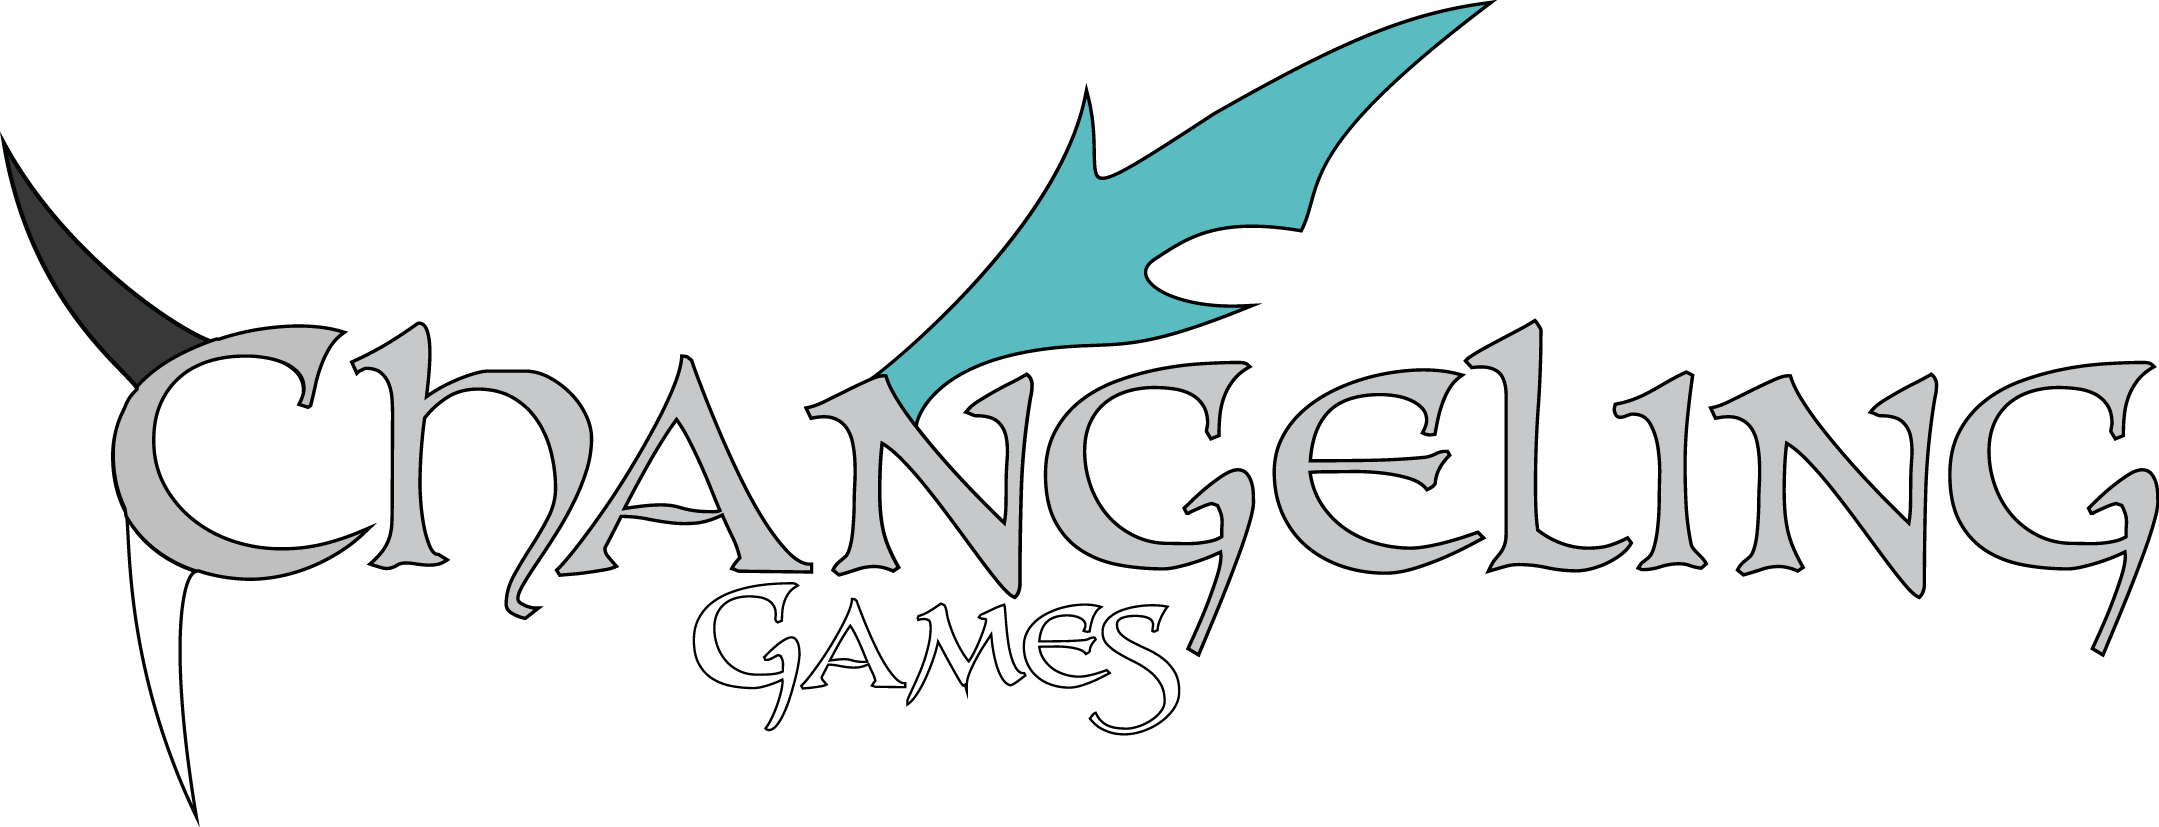 Changeling Games Logo